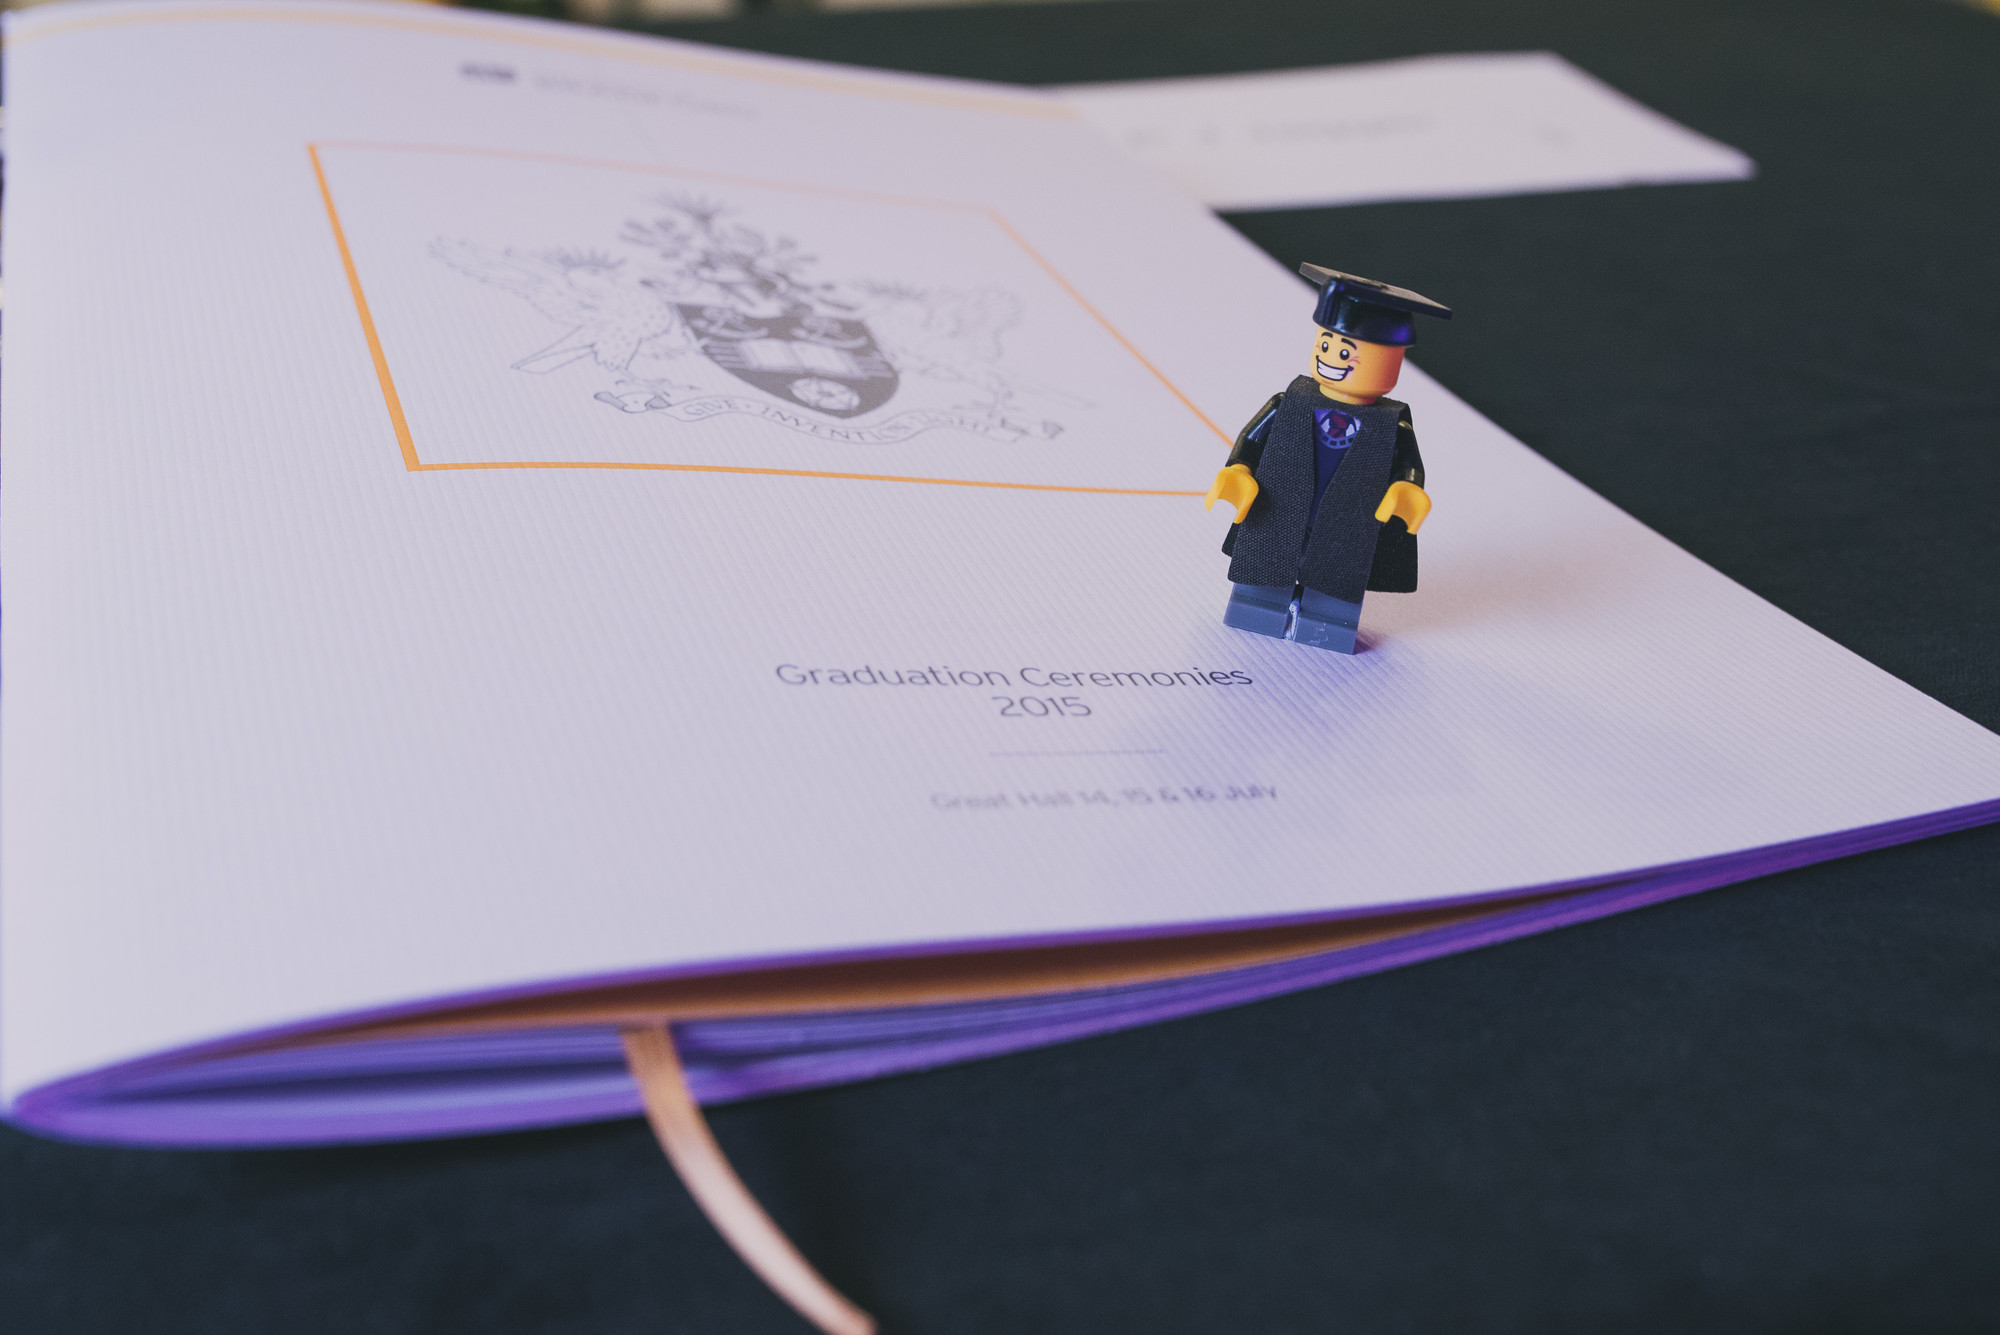 2015 Graduation booklet with lego figurine